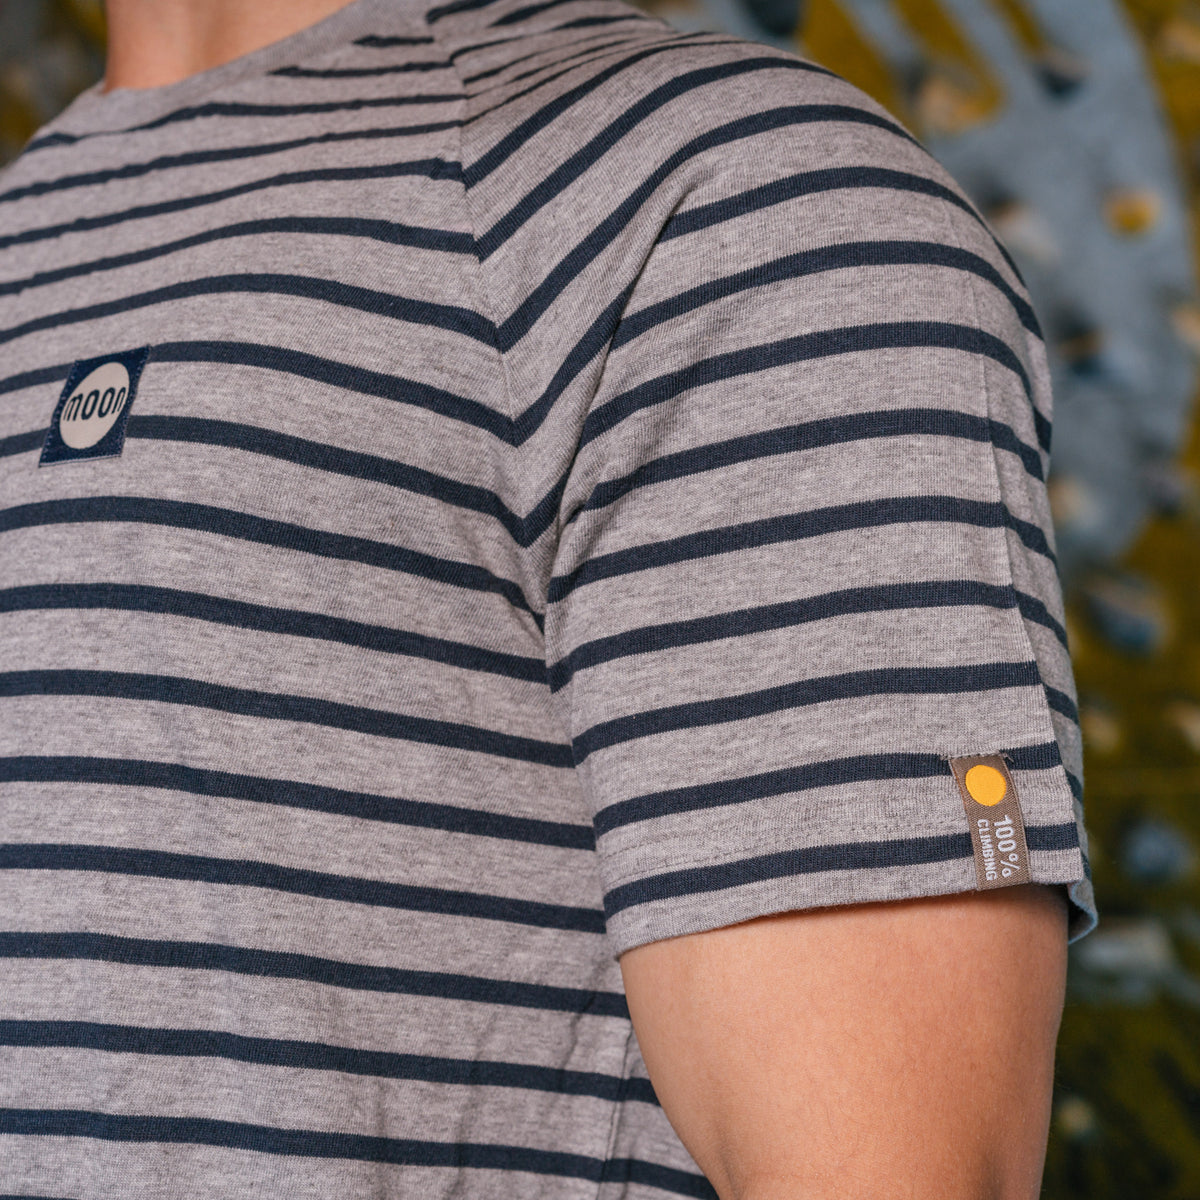 moon-striped-tts-grey sleeve detail